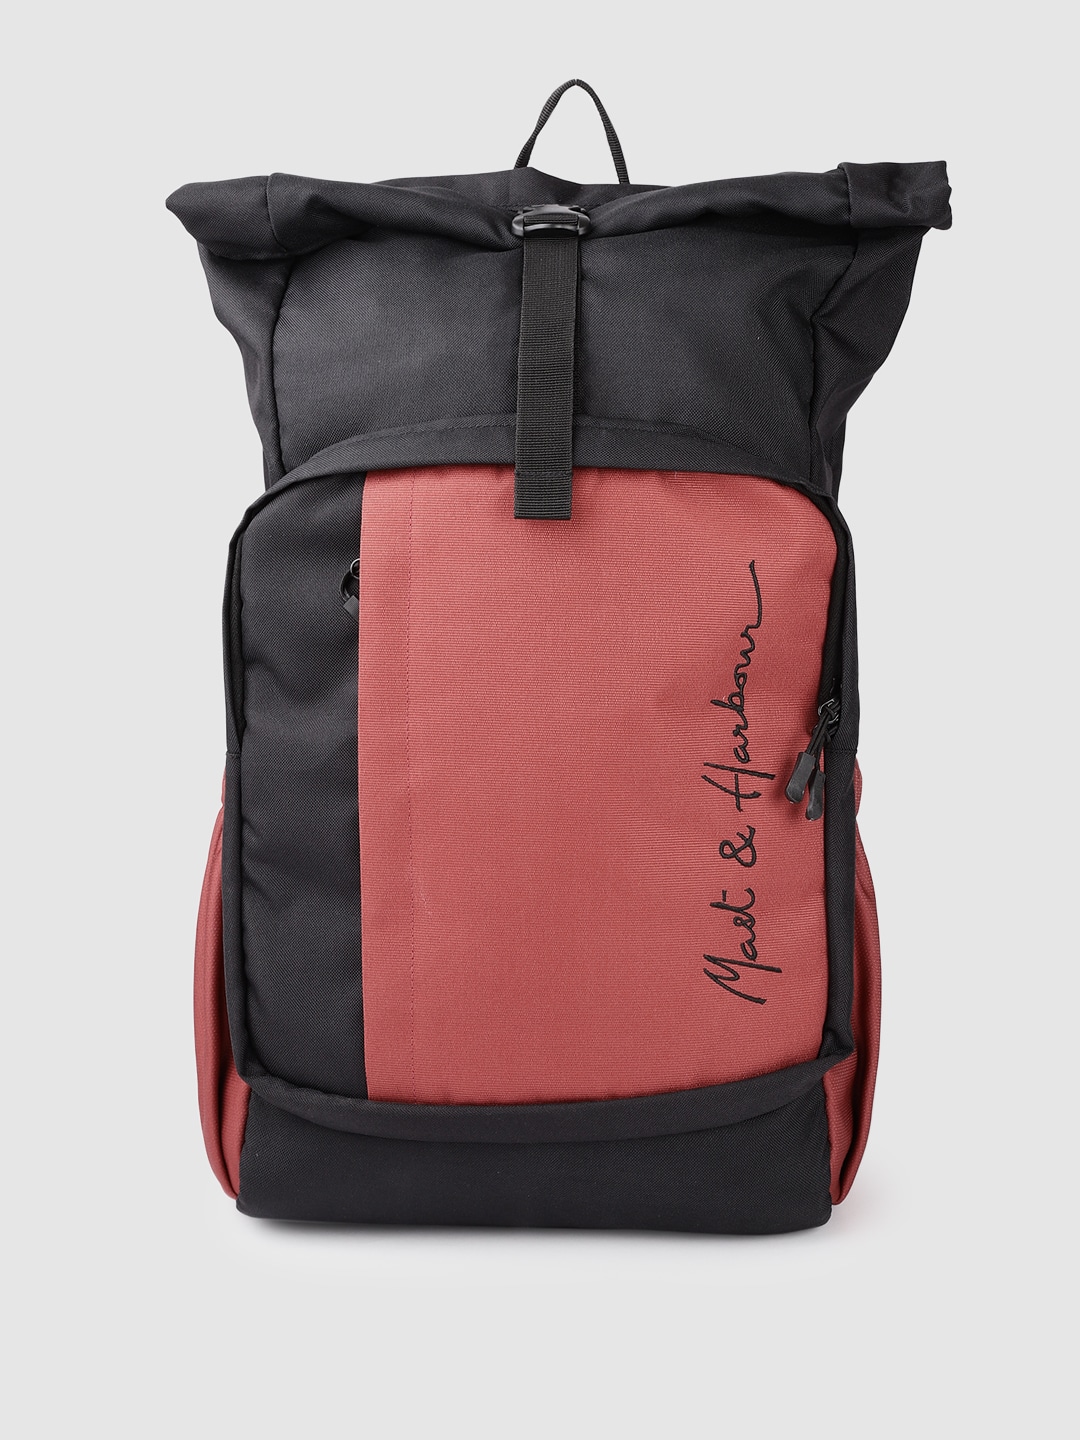 Mast & Harbour Unisex Black & Rust Orange Colourblocked Embroidered Backpack 21.4 L Price in India